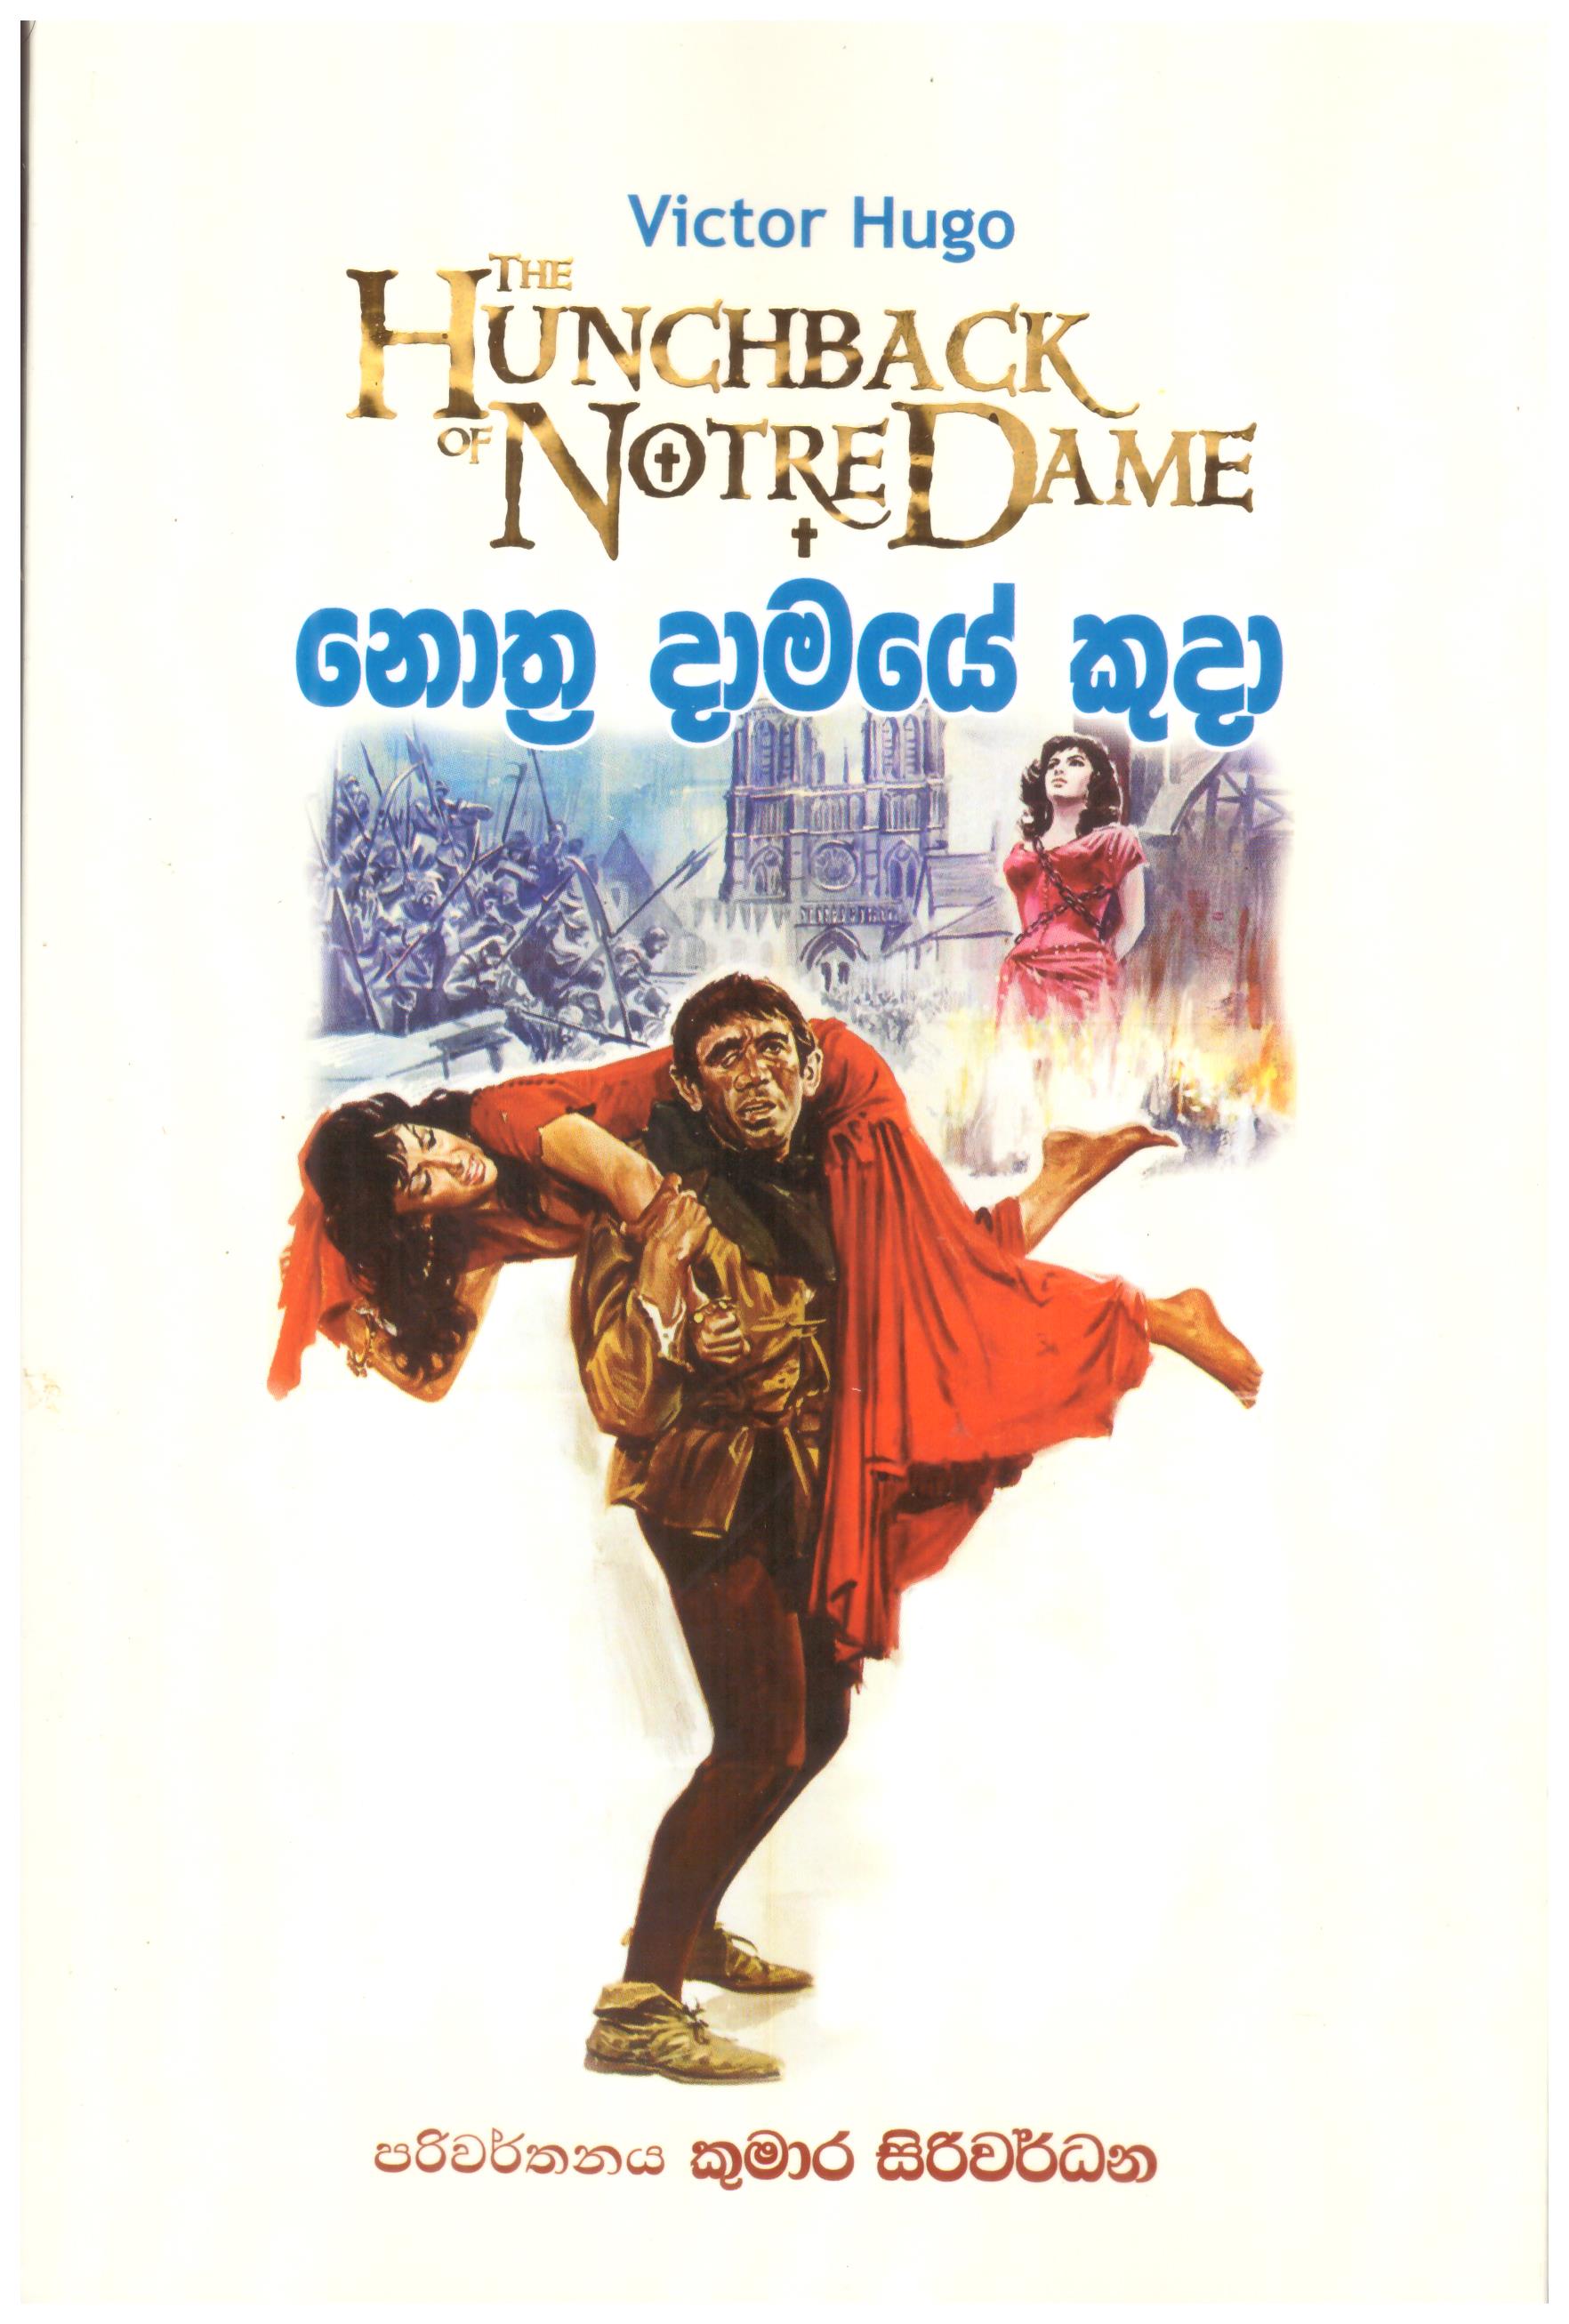 Nothra Damaye Kudha - Translation of The Hunchback of Notredame By Victo Hugo